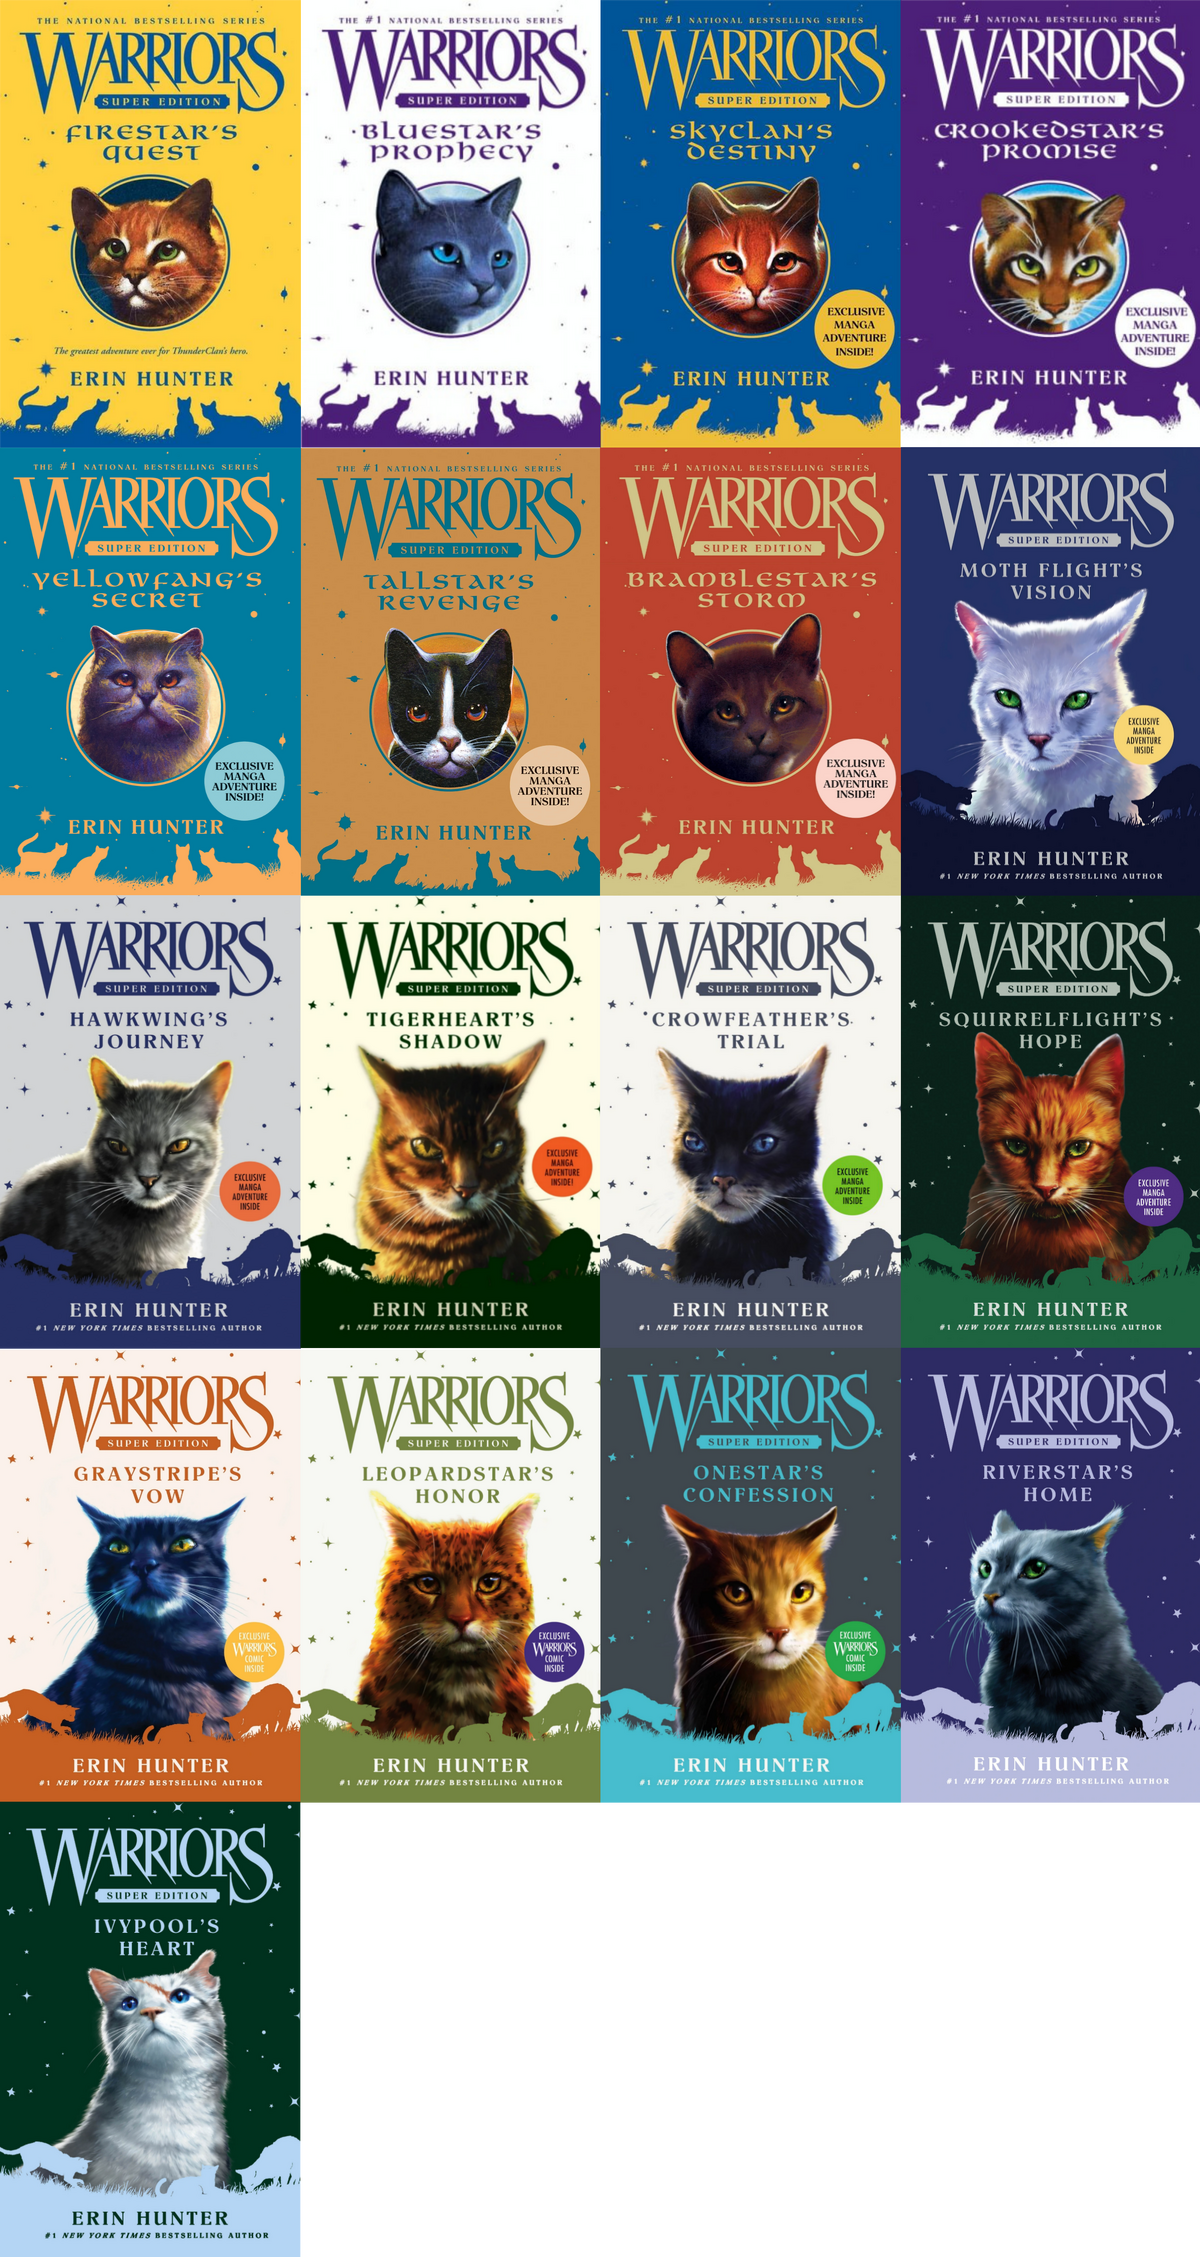 Warriors Series Books (6 Titles)